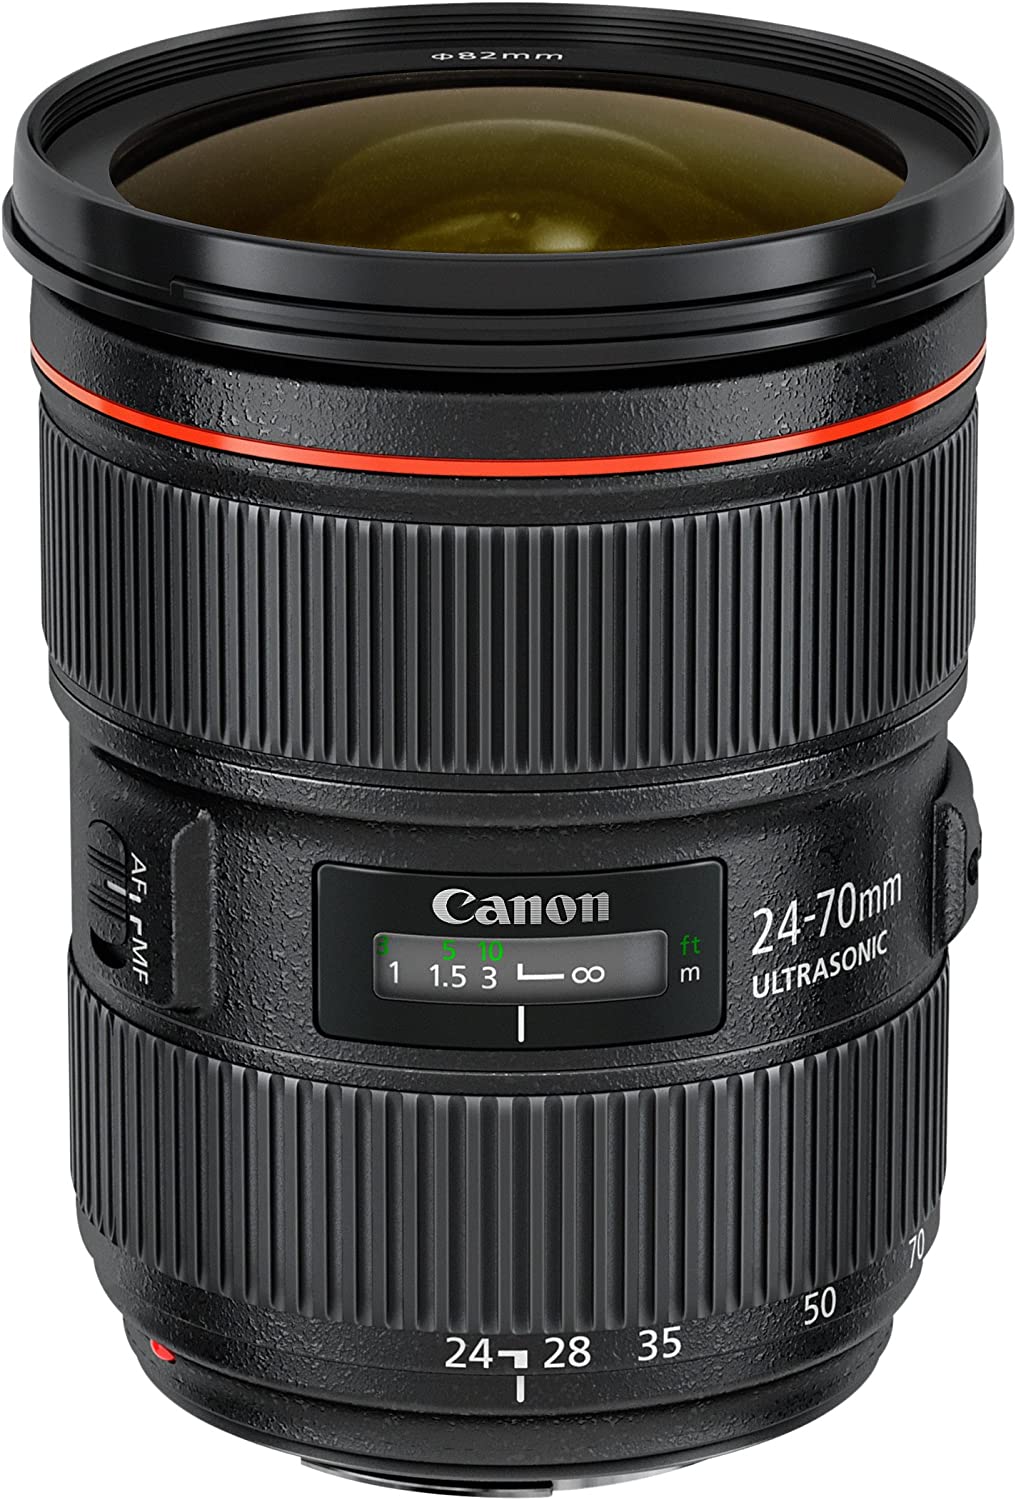 Canon EF 24-70mm f/2.8L IS USM Lens UK USED